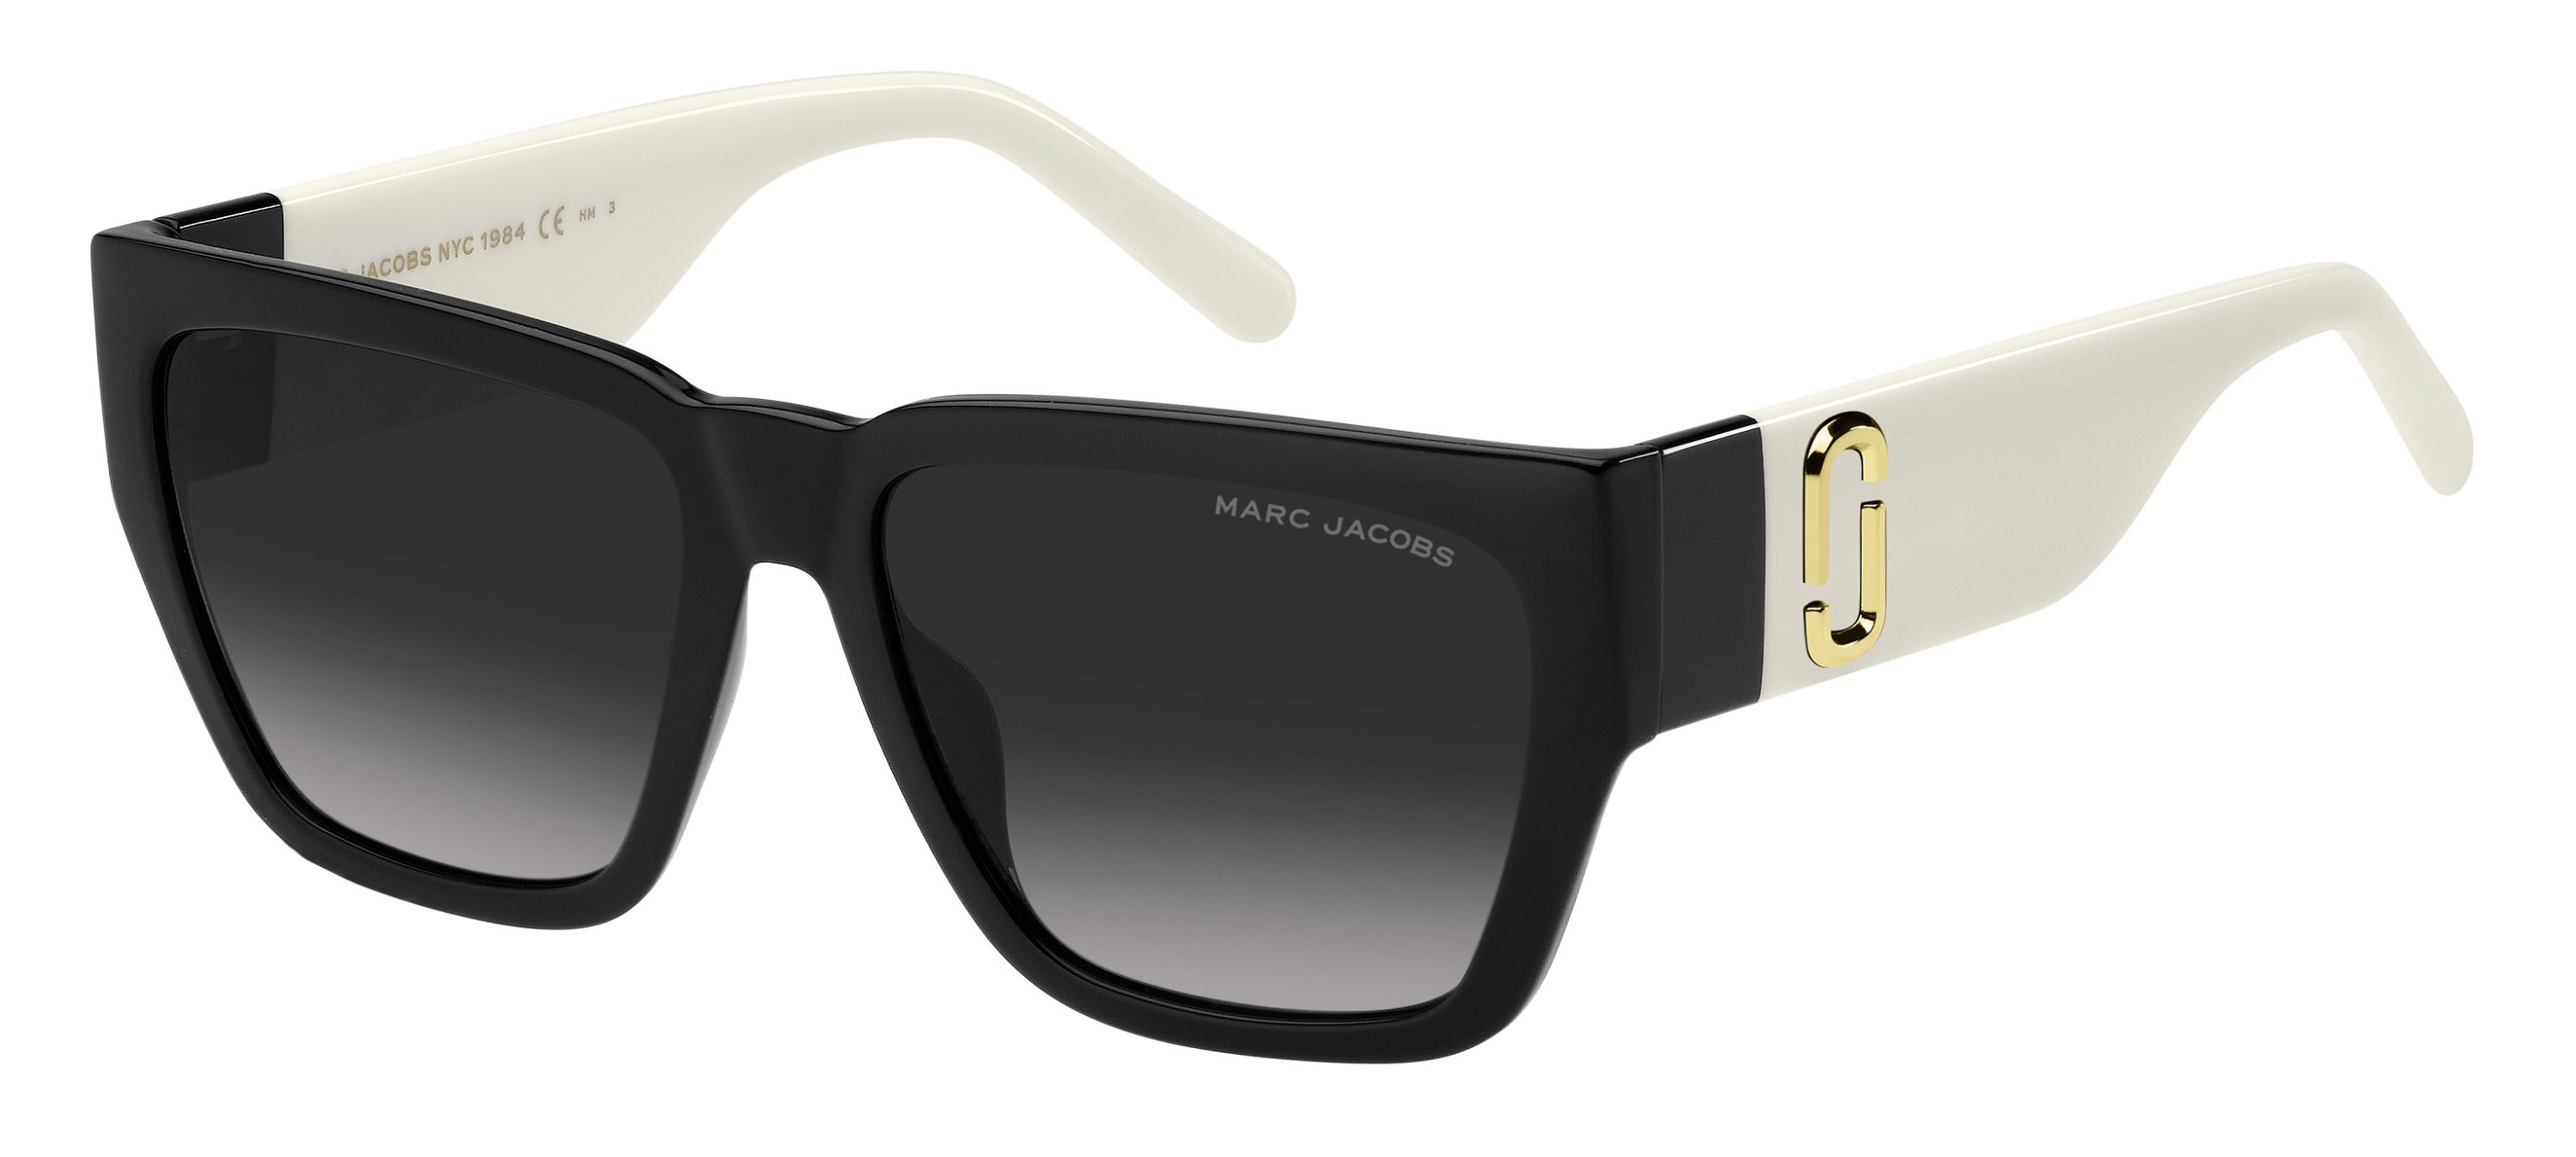 Marc Jacobs Sonnenbrille in black white Marc646/S 80S